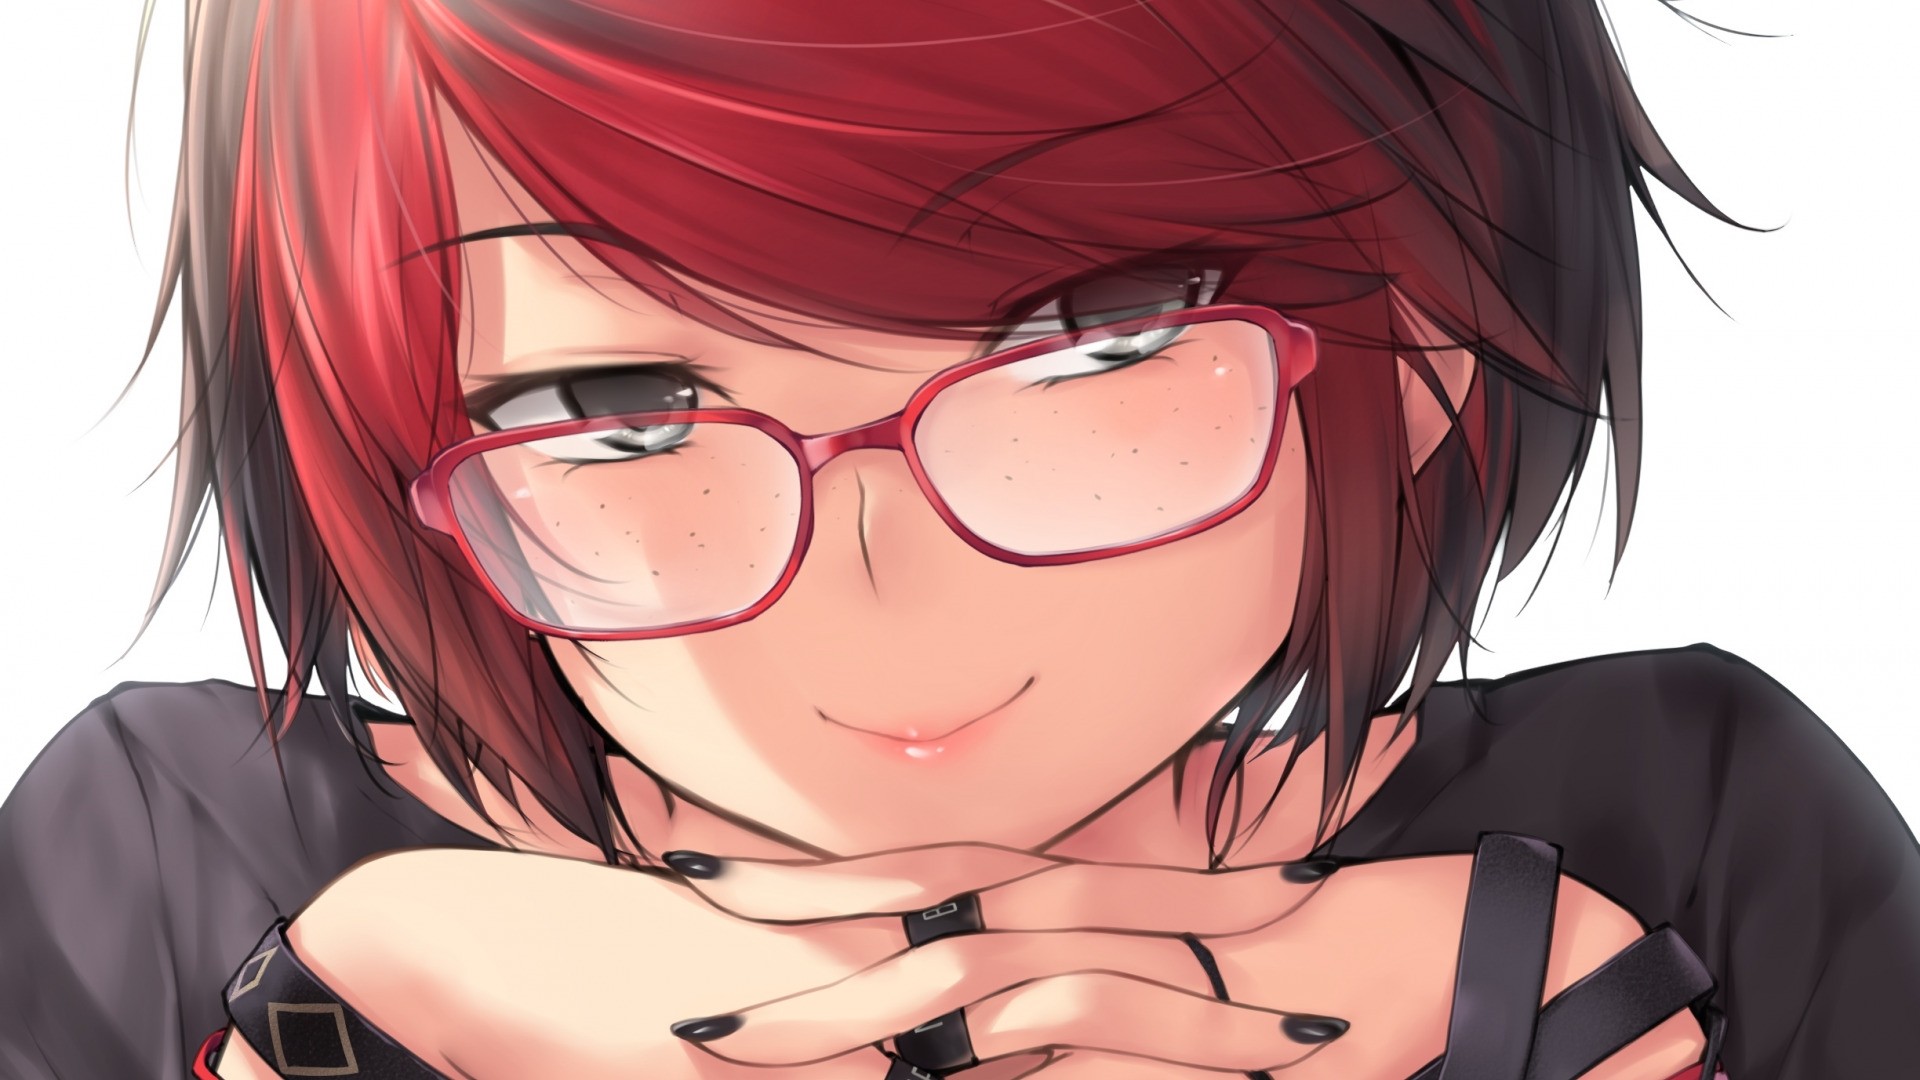 Anime Girl With Glasses Image